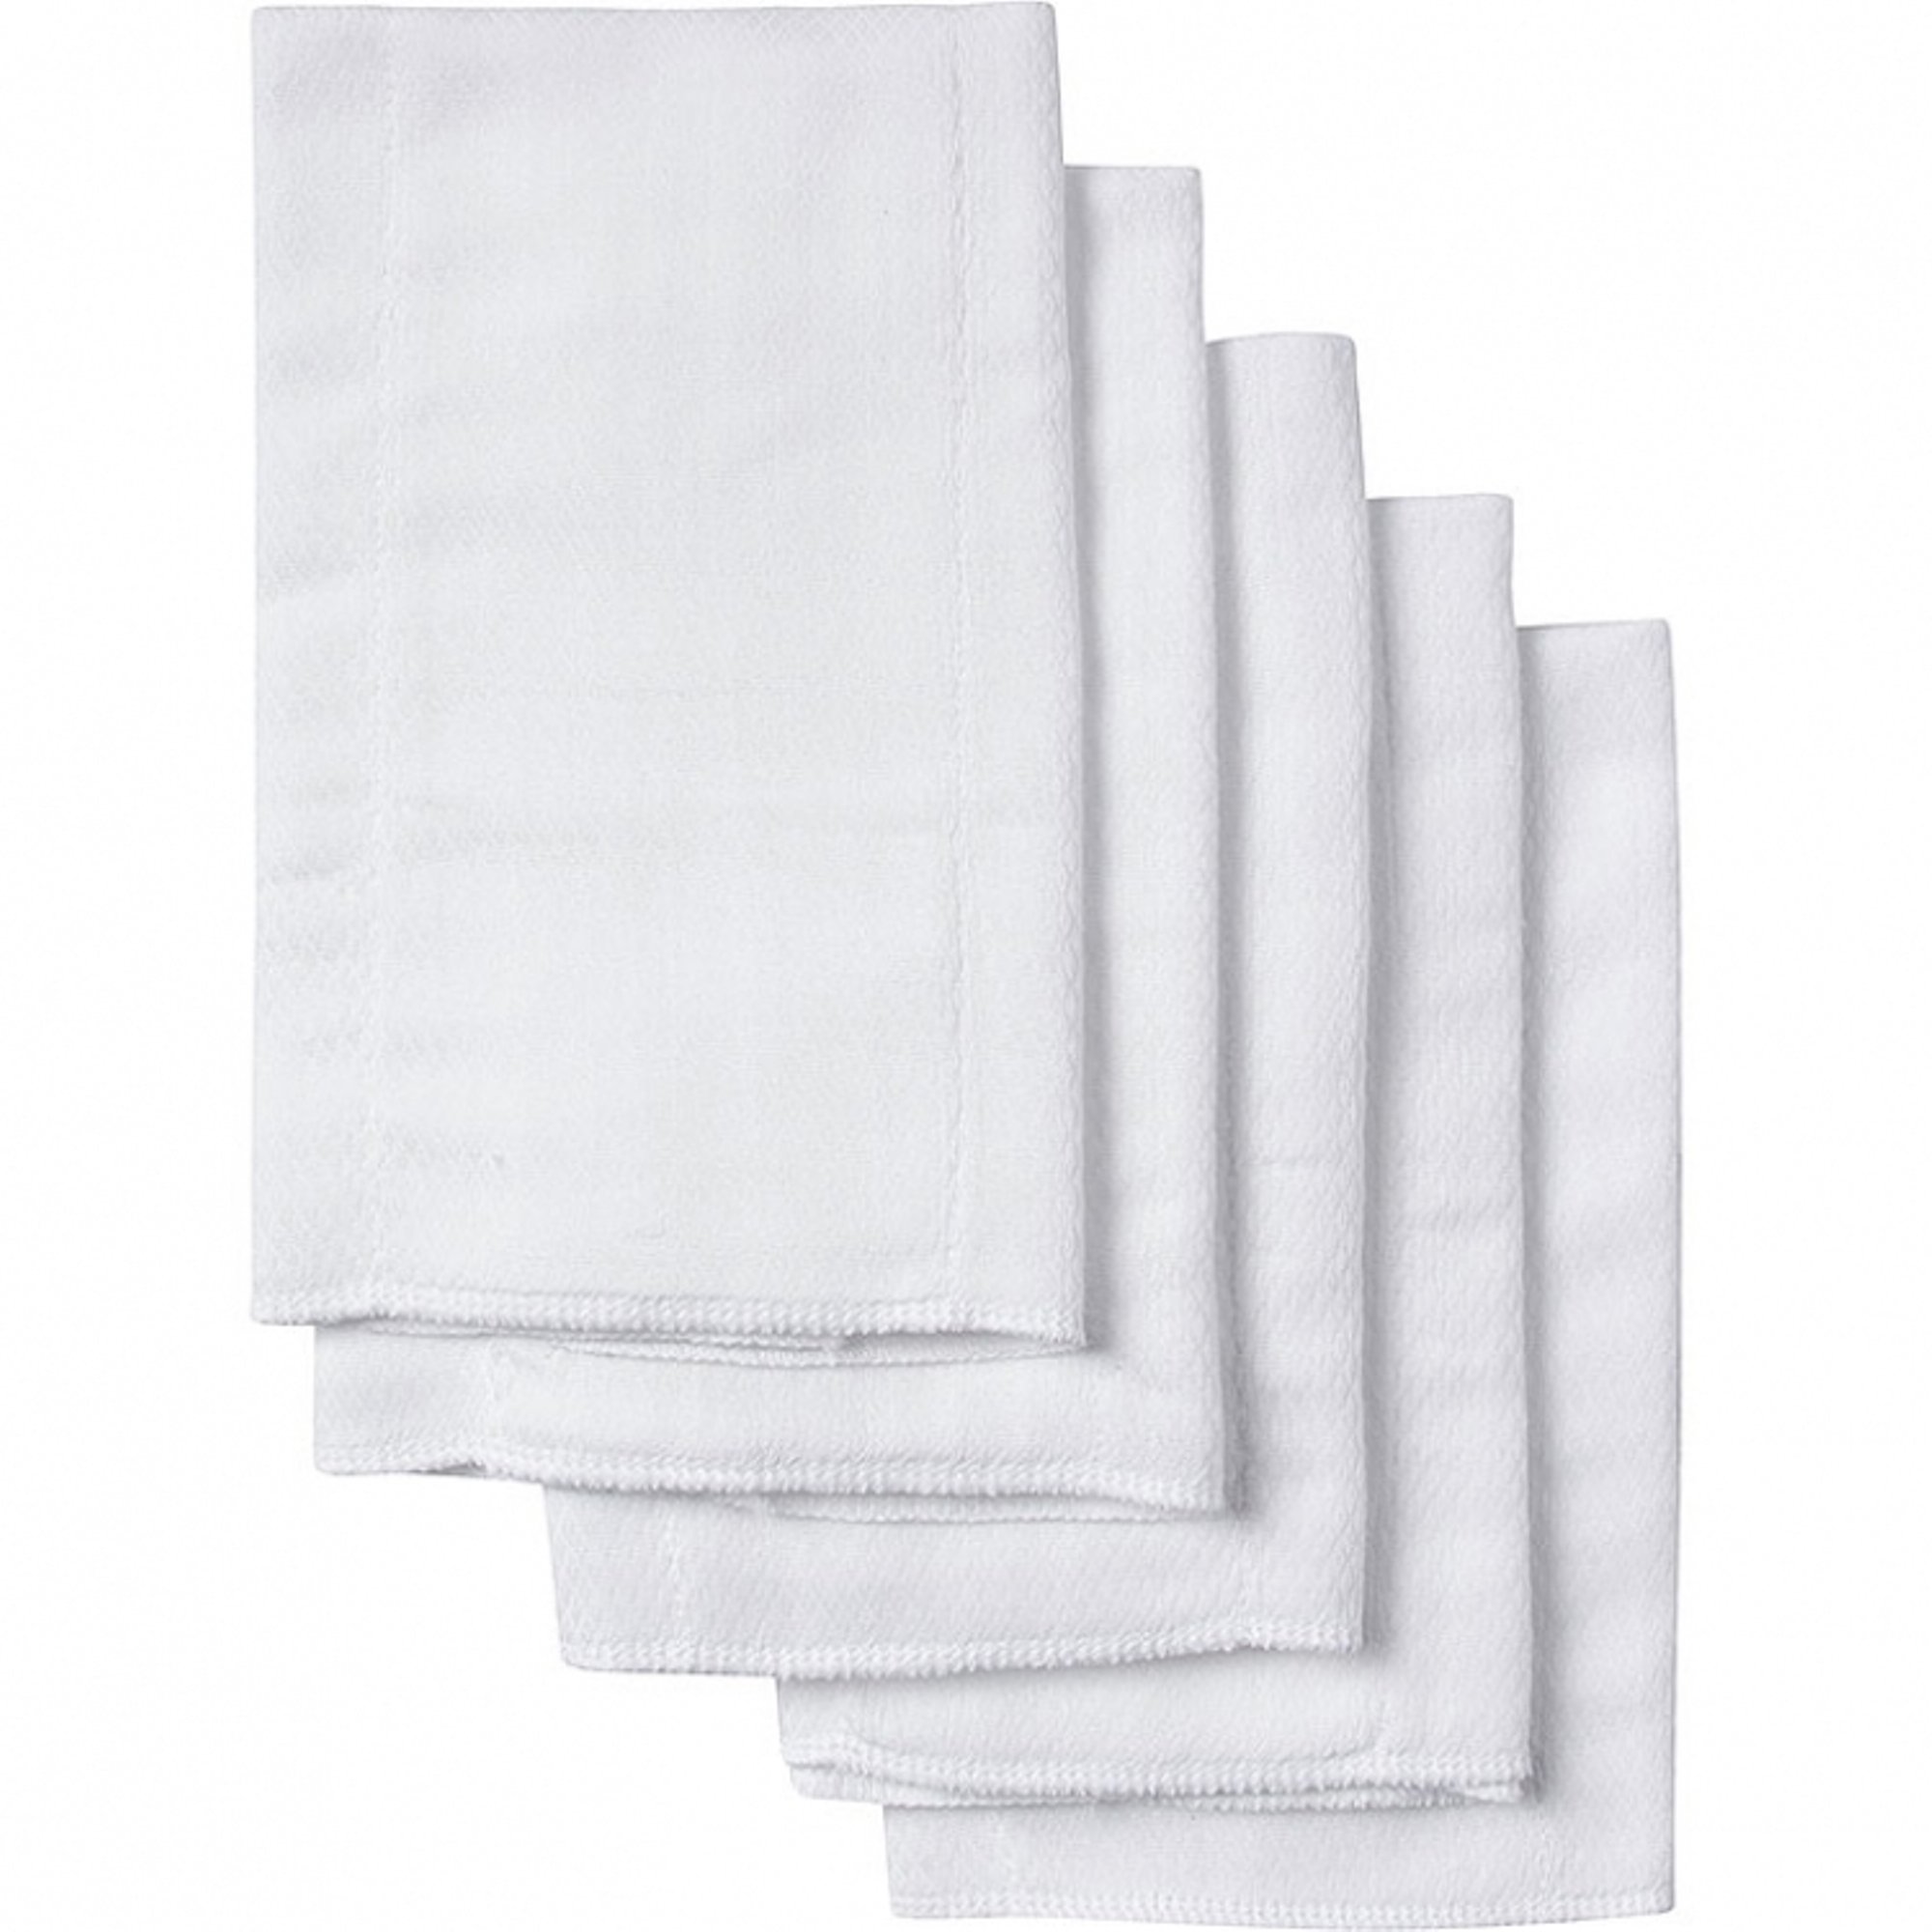 Gerber 5 Count Birdseye Prefold Cloth Diaper, White